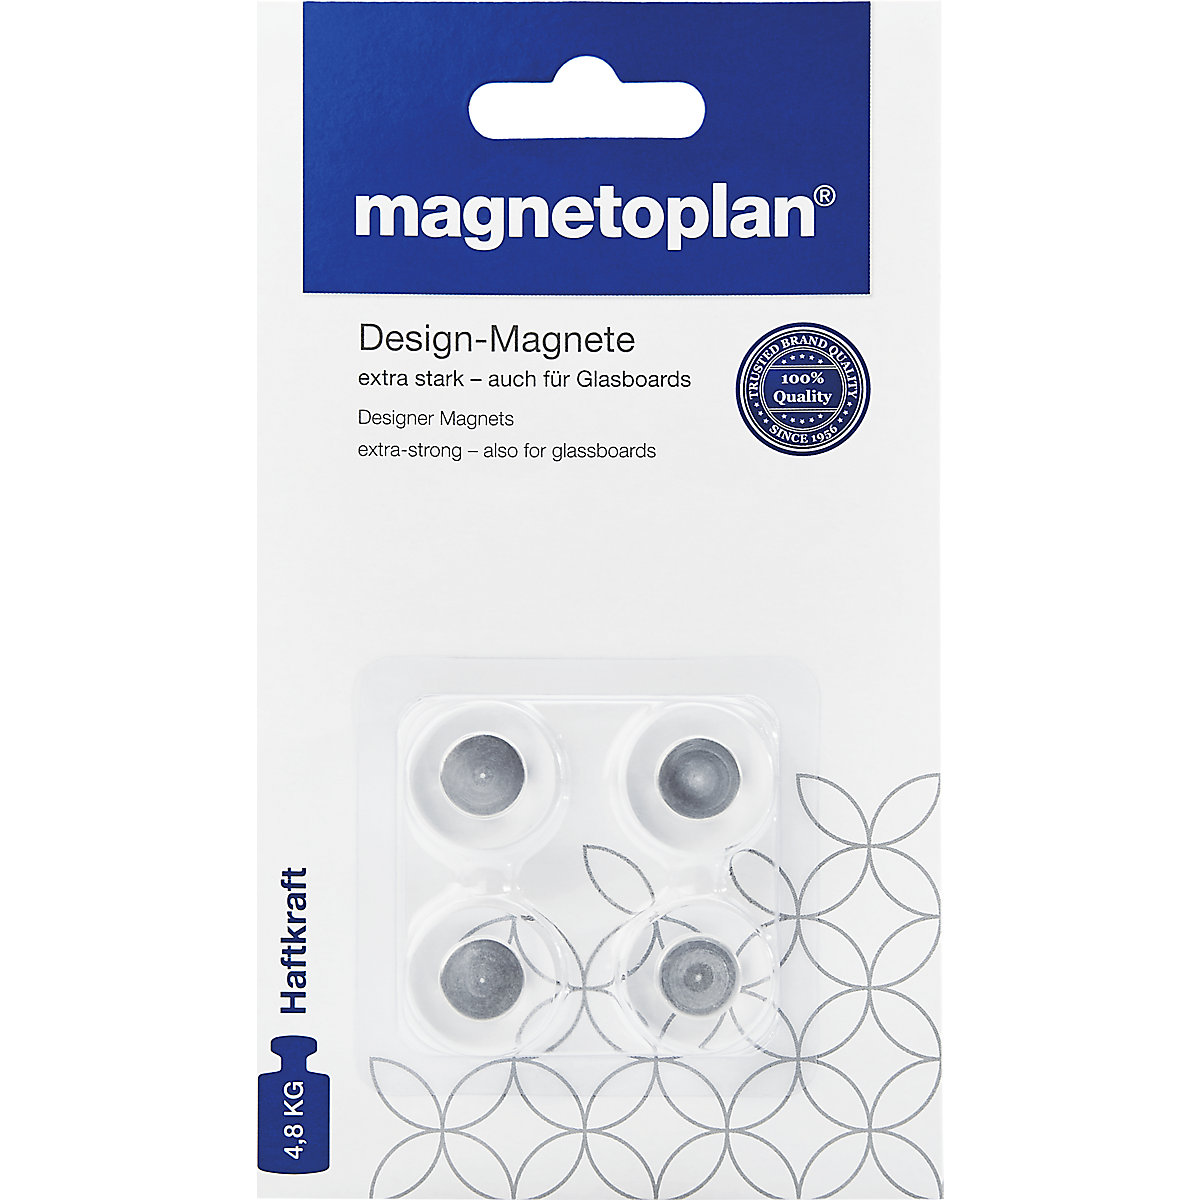 Imán de diseño – magnetoplan